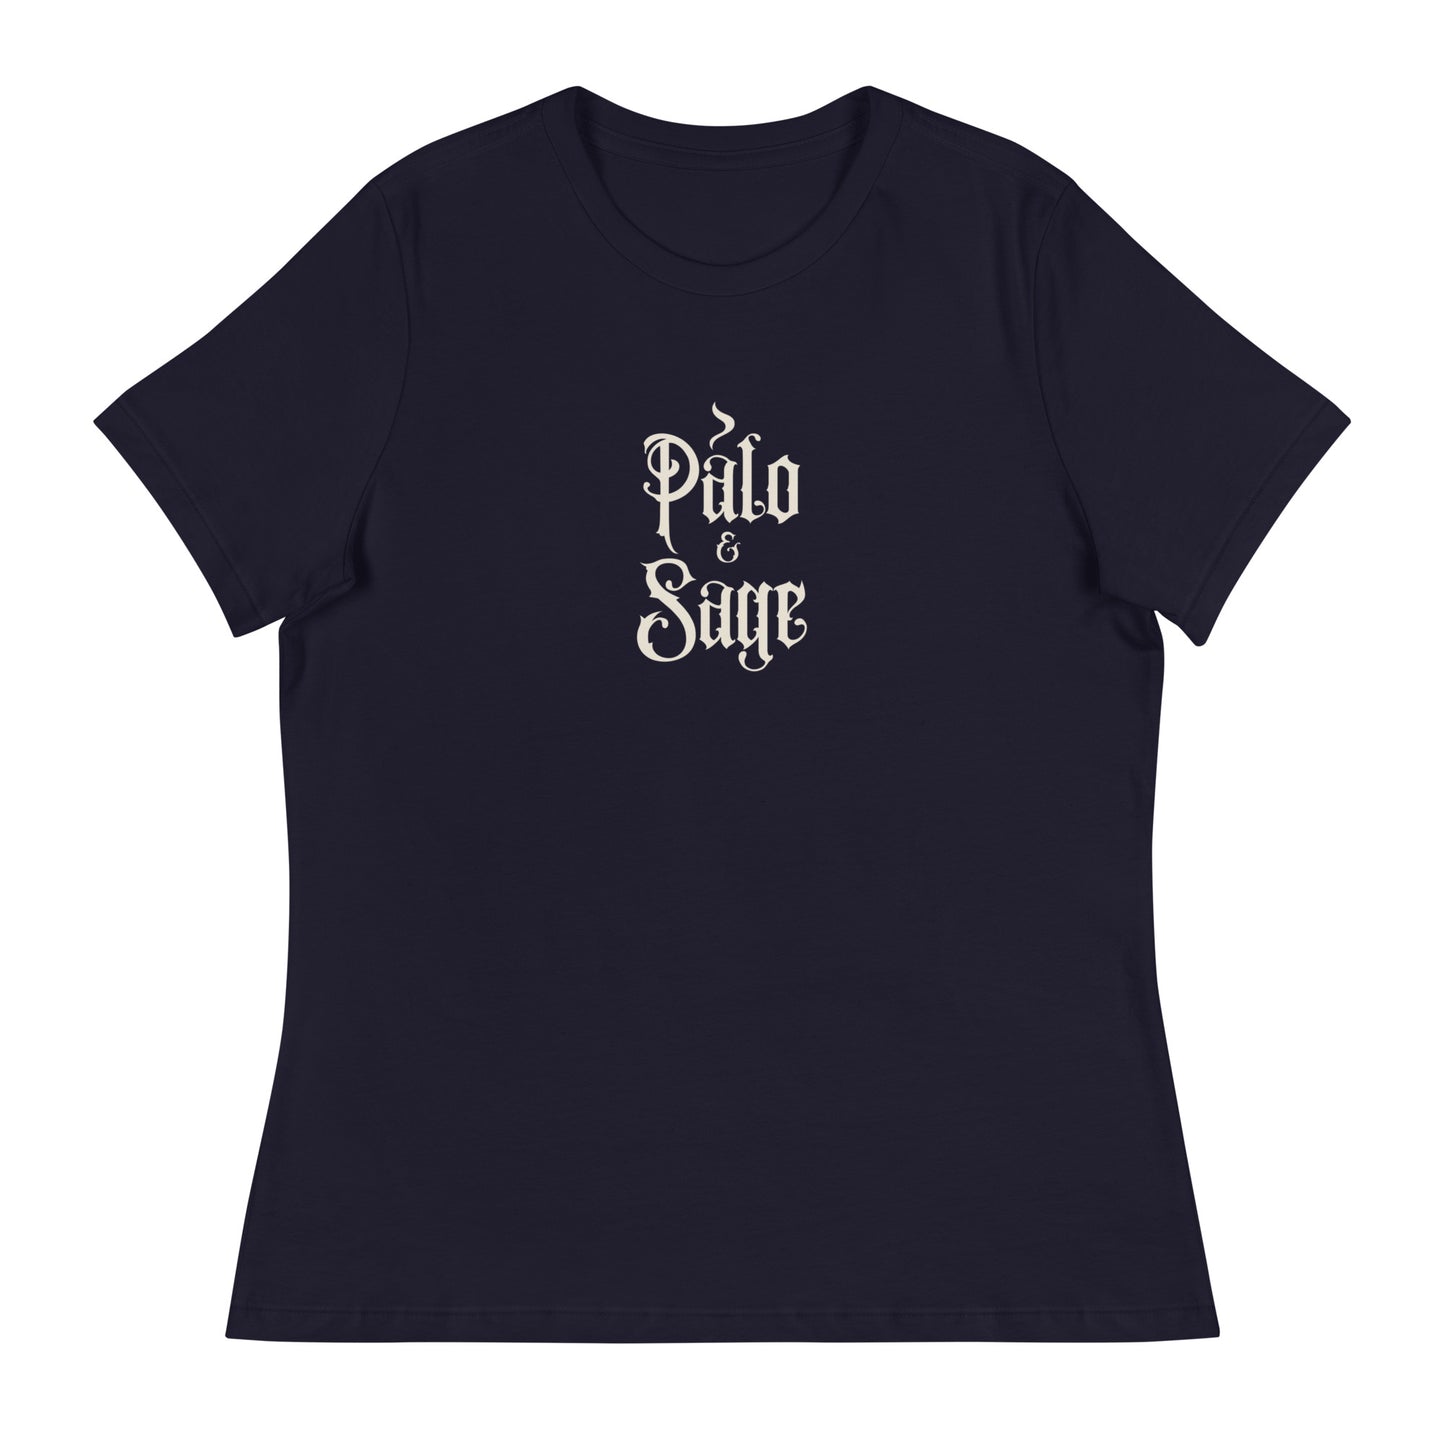 Palo and Sage - Black T-Shirt